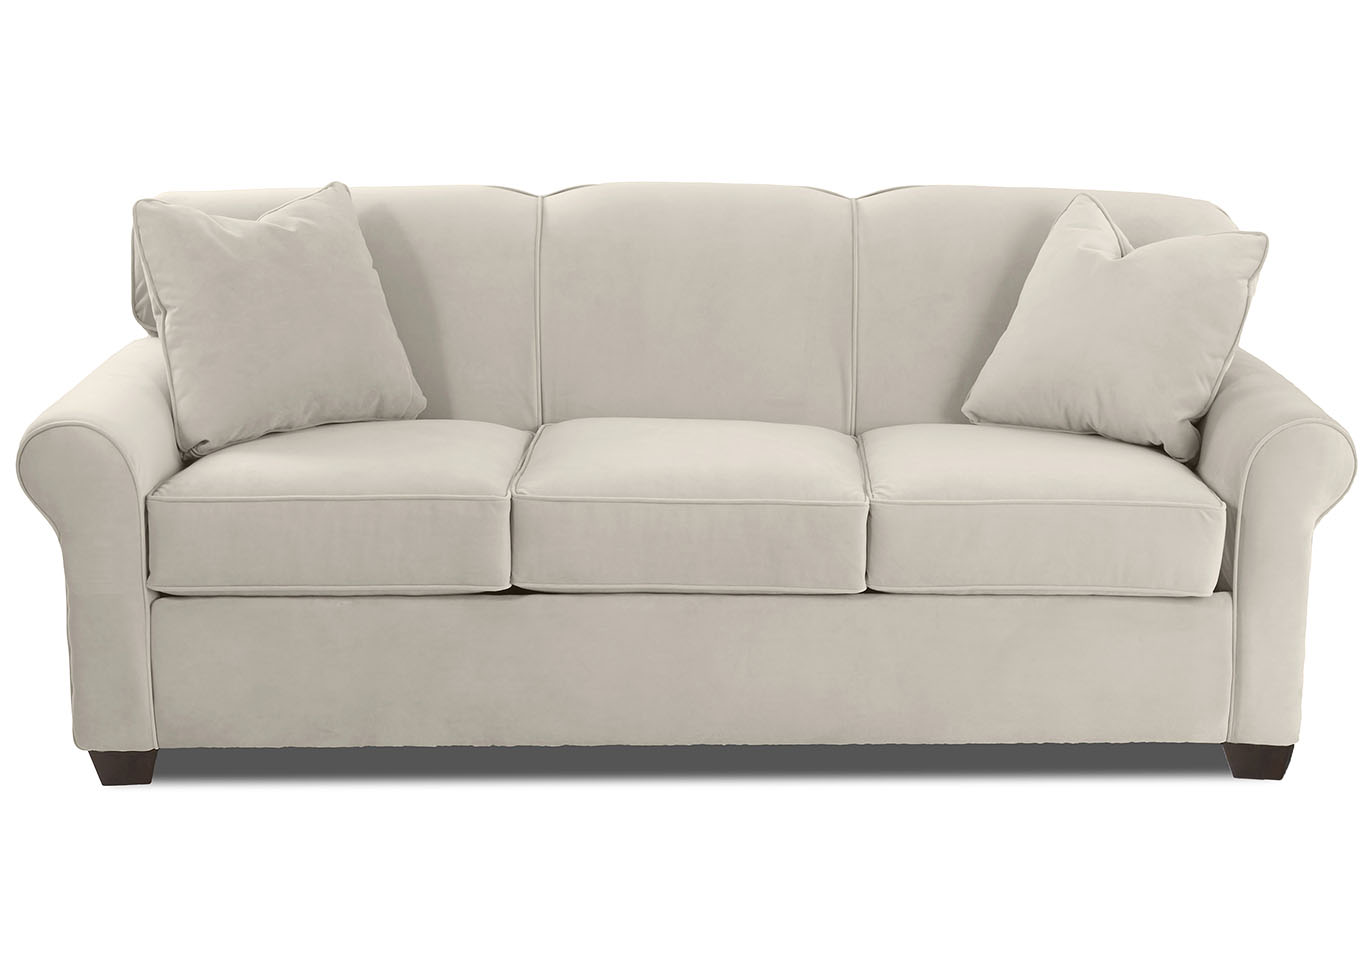 blandt Nemlig Bekendtgørelse Mayhew Off-White Sleeper Fabric Sofa Best Buy Furniture and Mattress